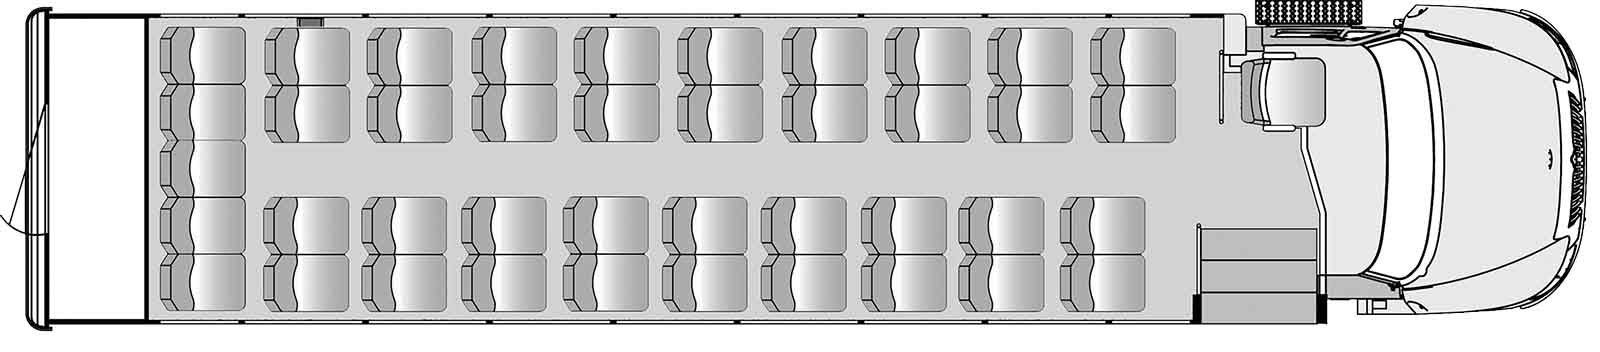 41 Passenger with Rear Luggage Plus Driver Floorplan Image